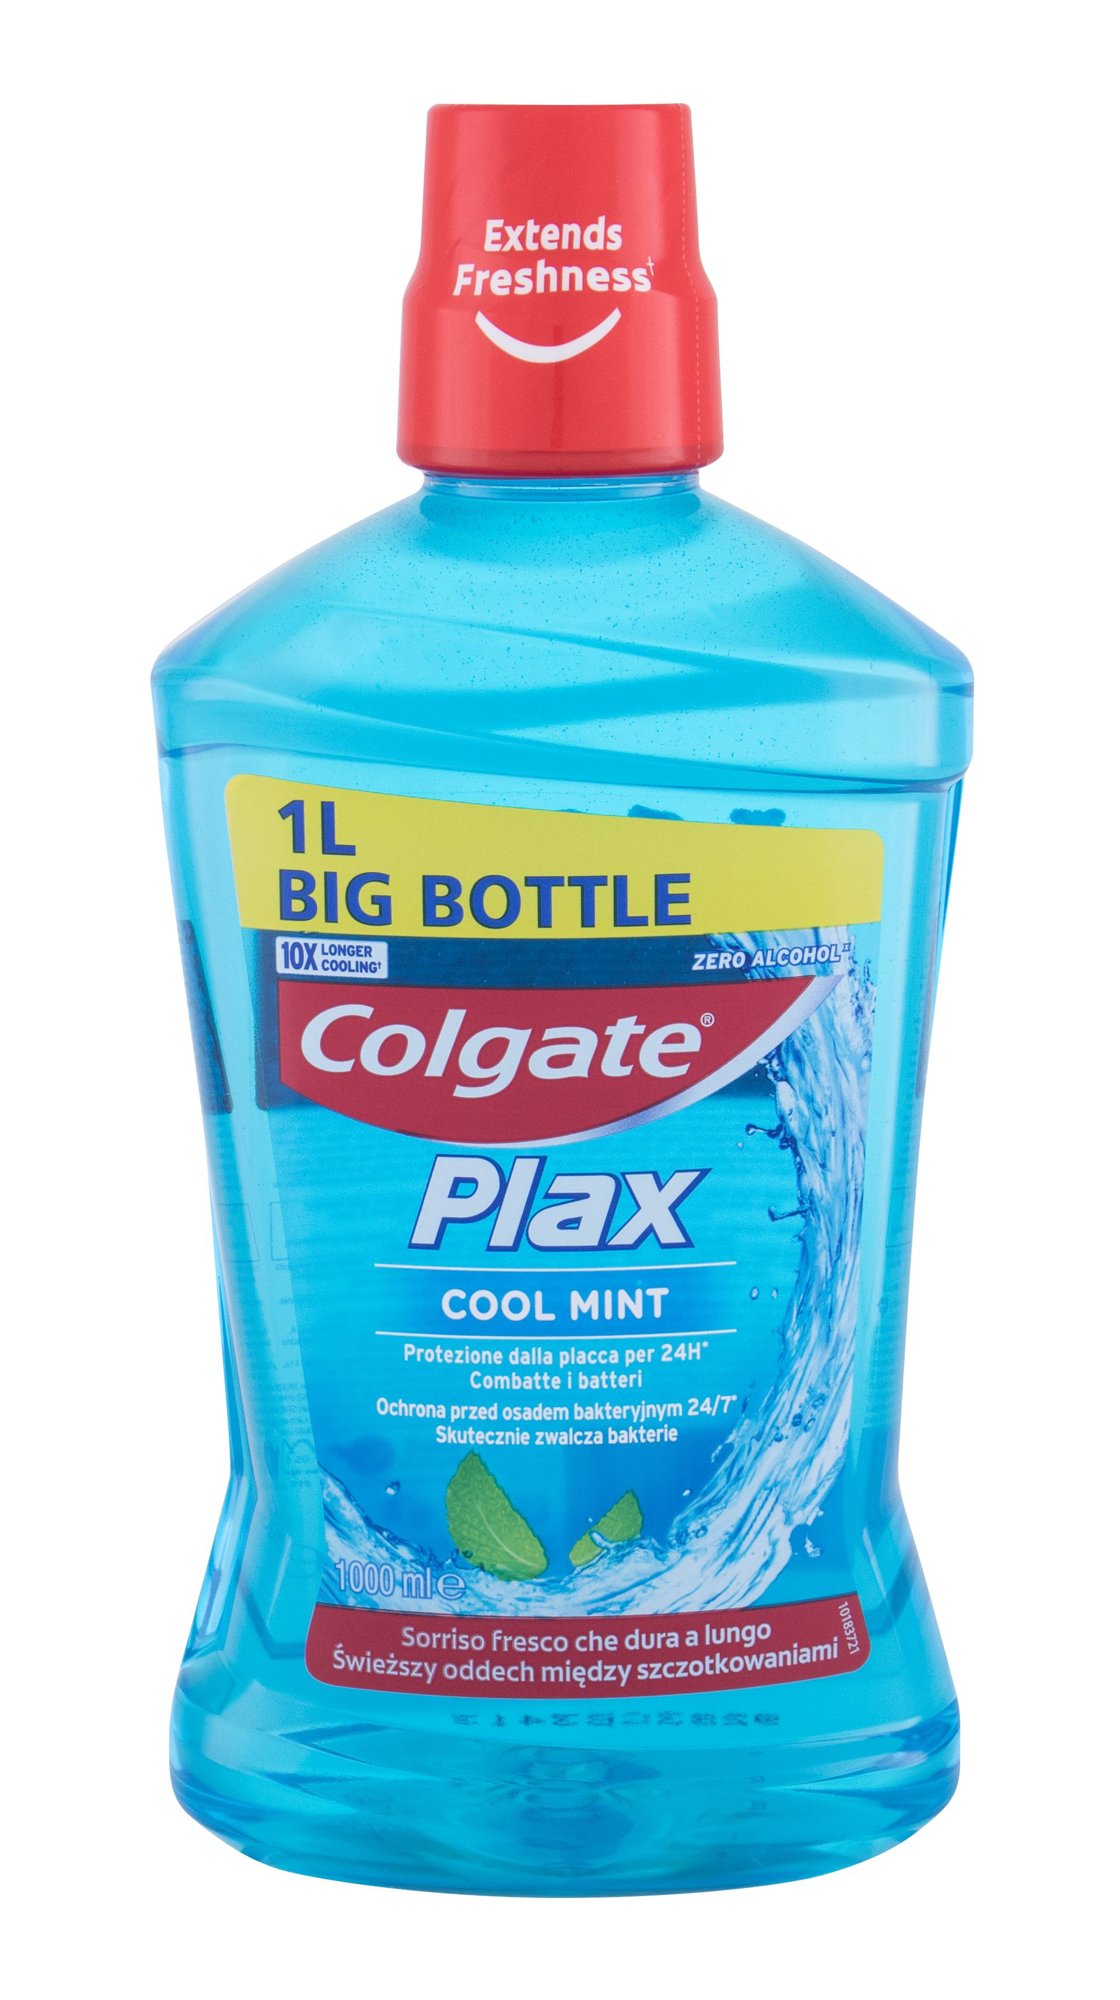 Colgate Plax Cool Mint 1000ml dantų skalavimo skystis